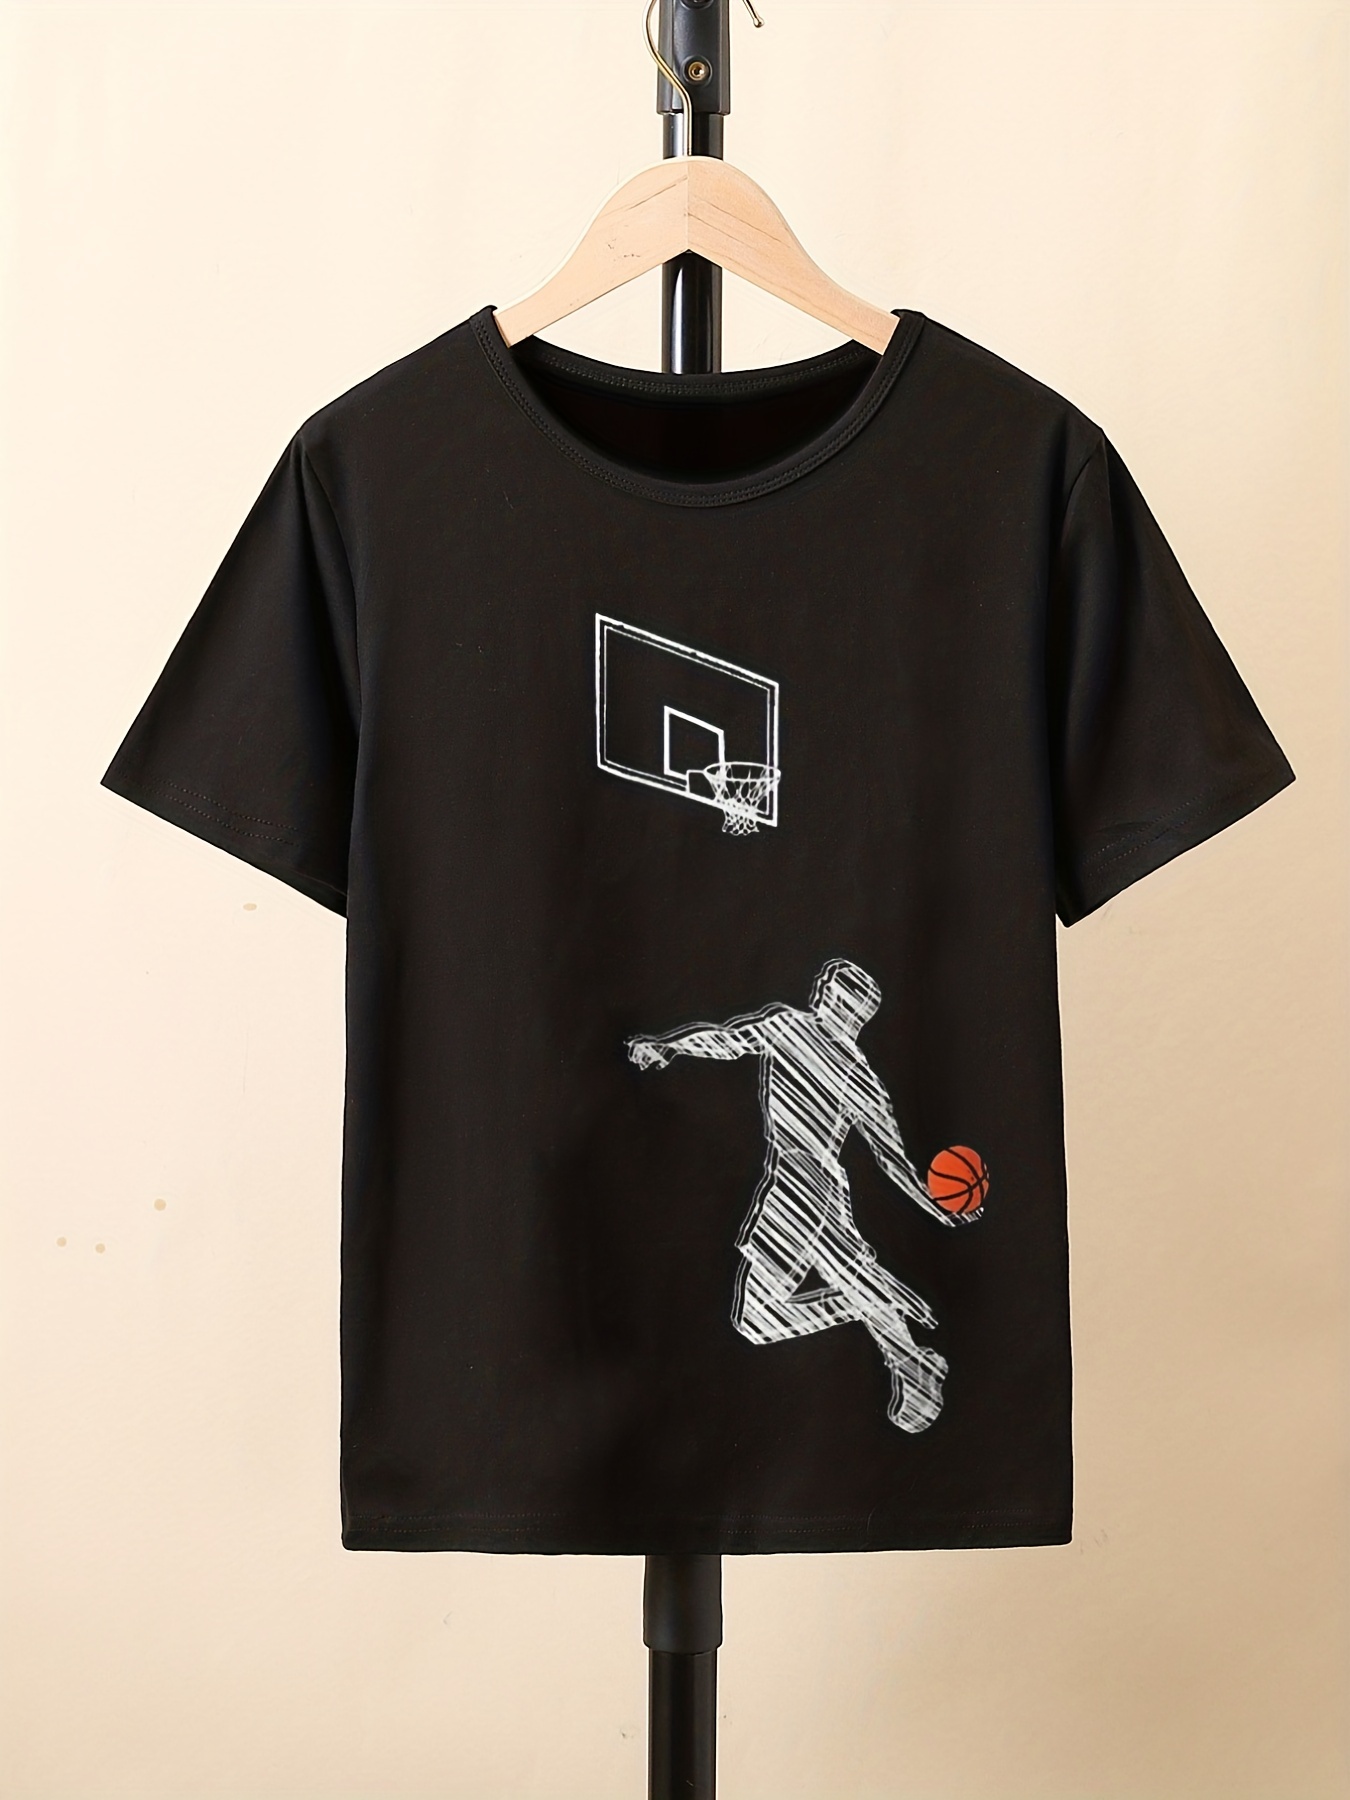 Camiseta print basket niño, Camisetas para niño